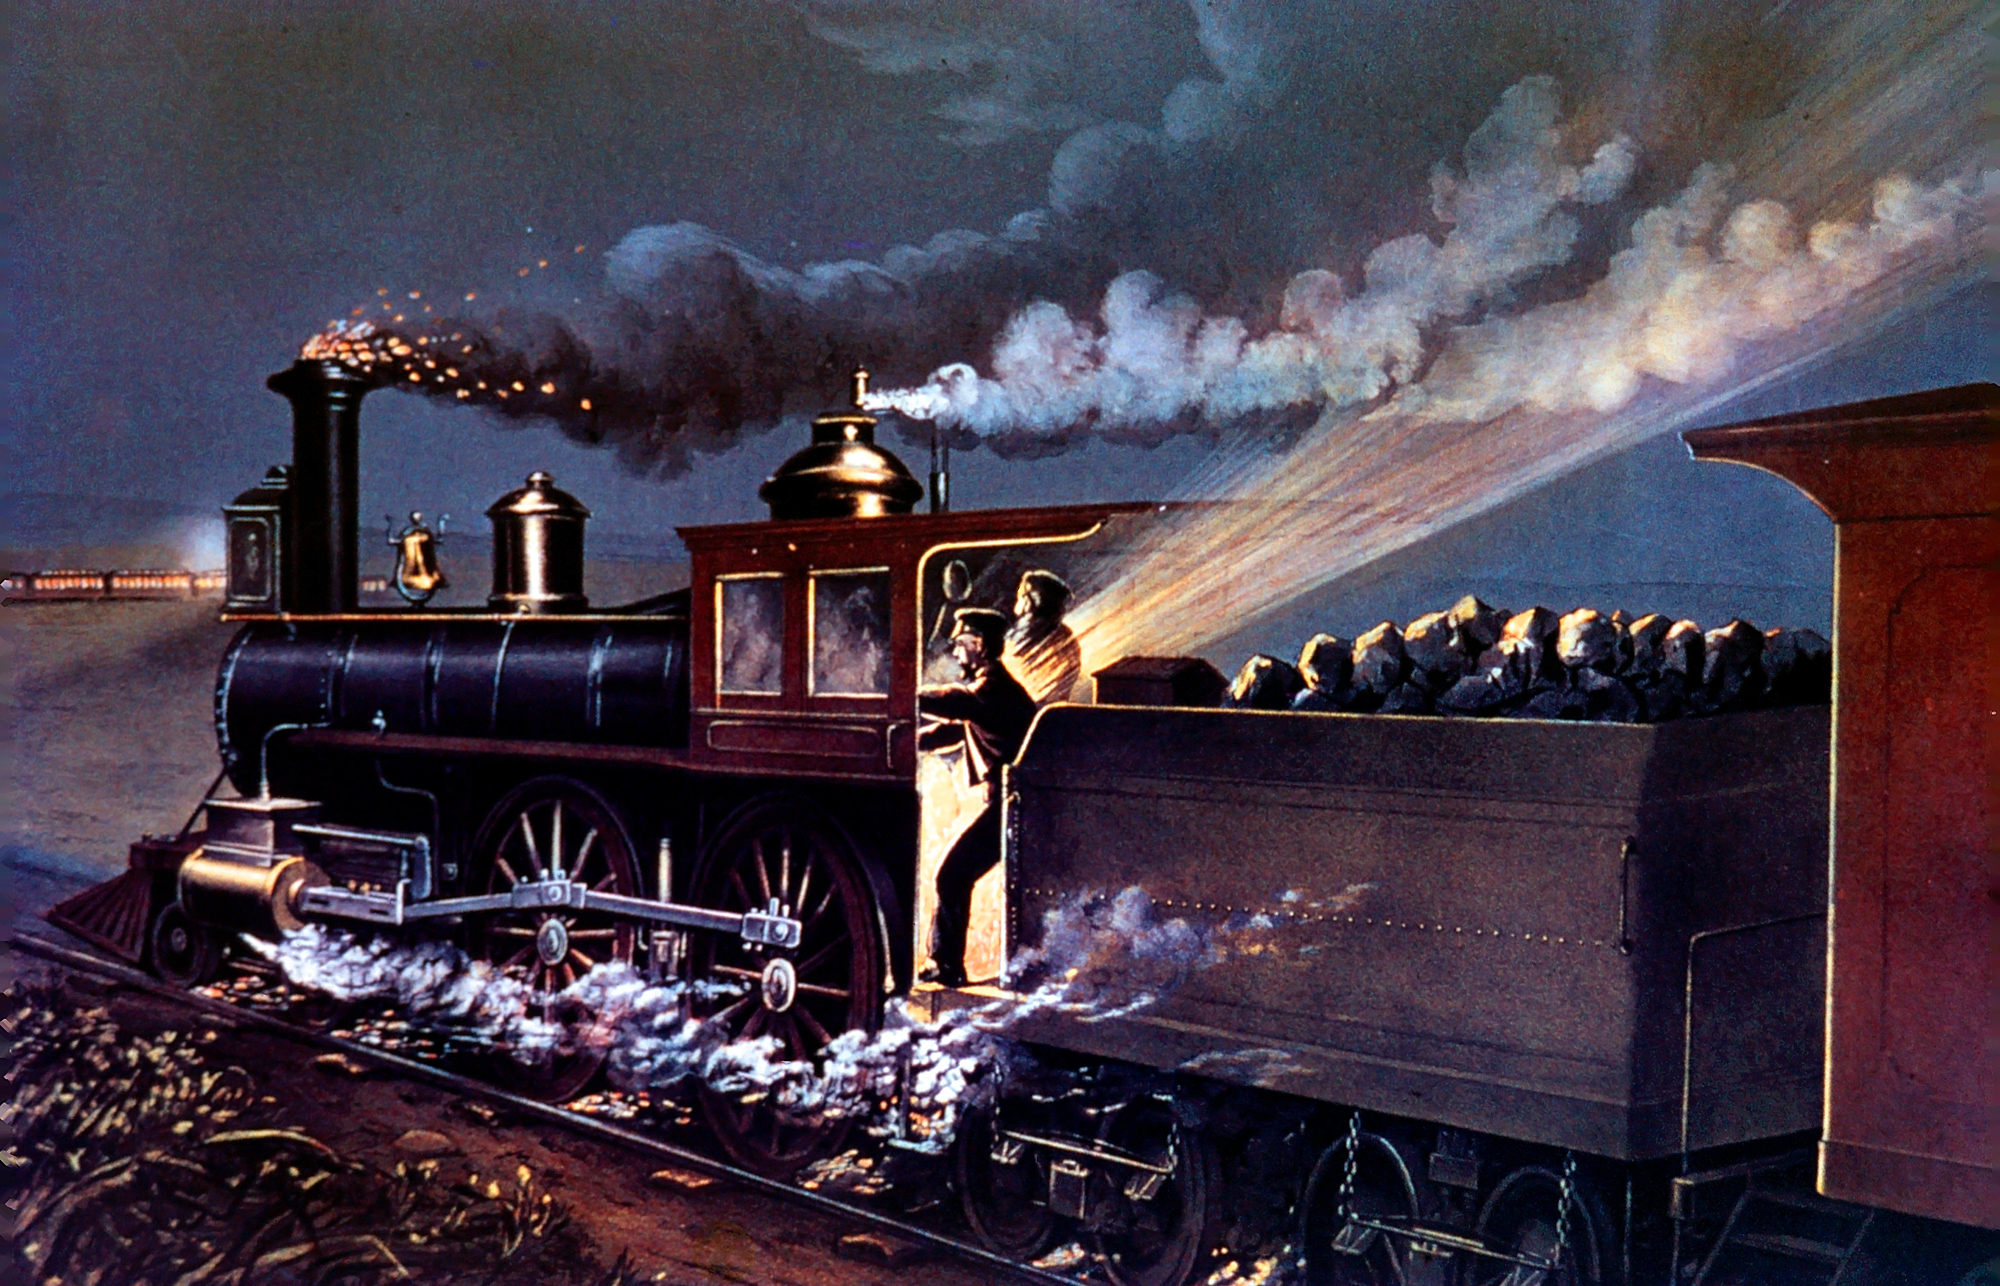 industrial revolution railroads england